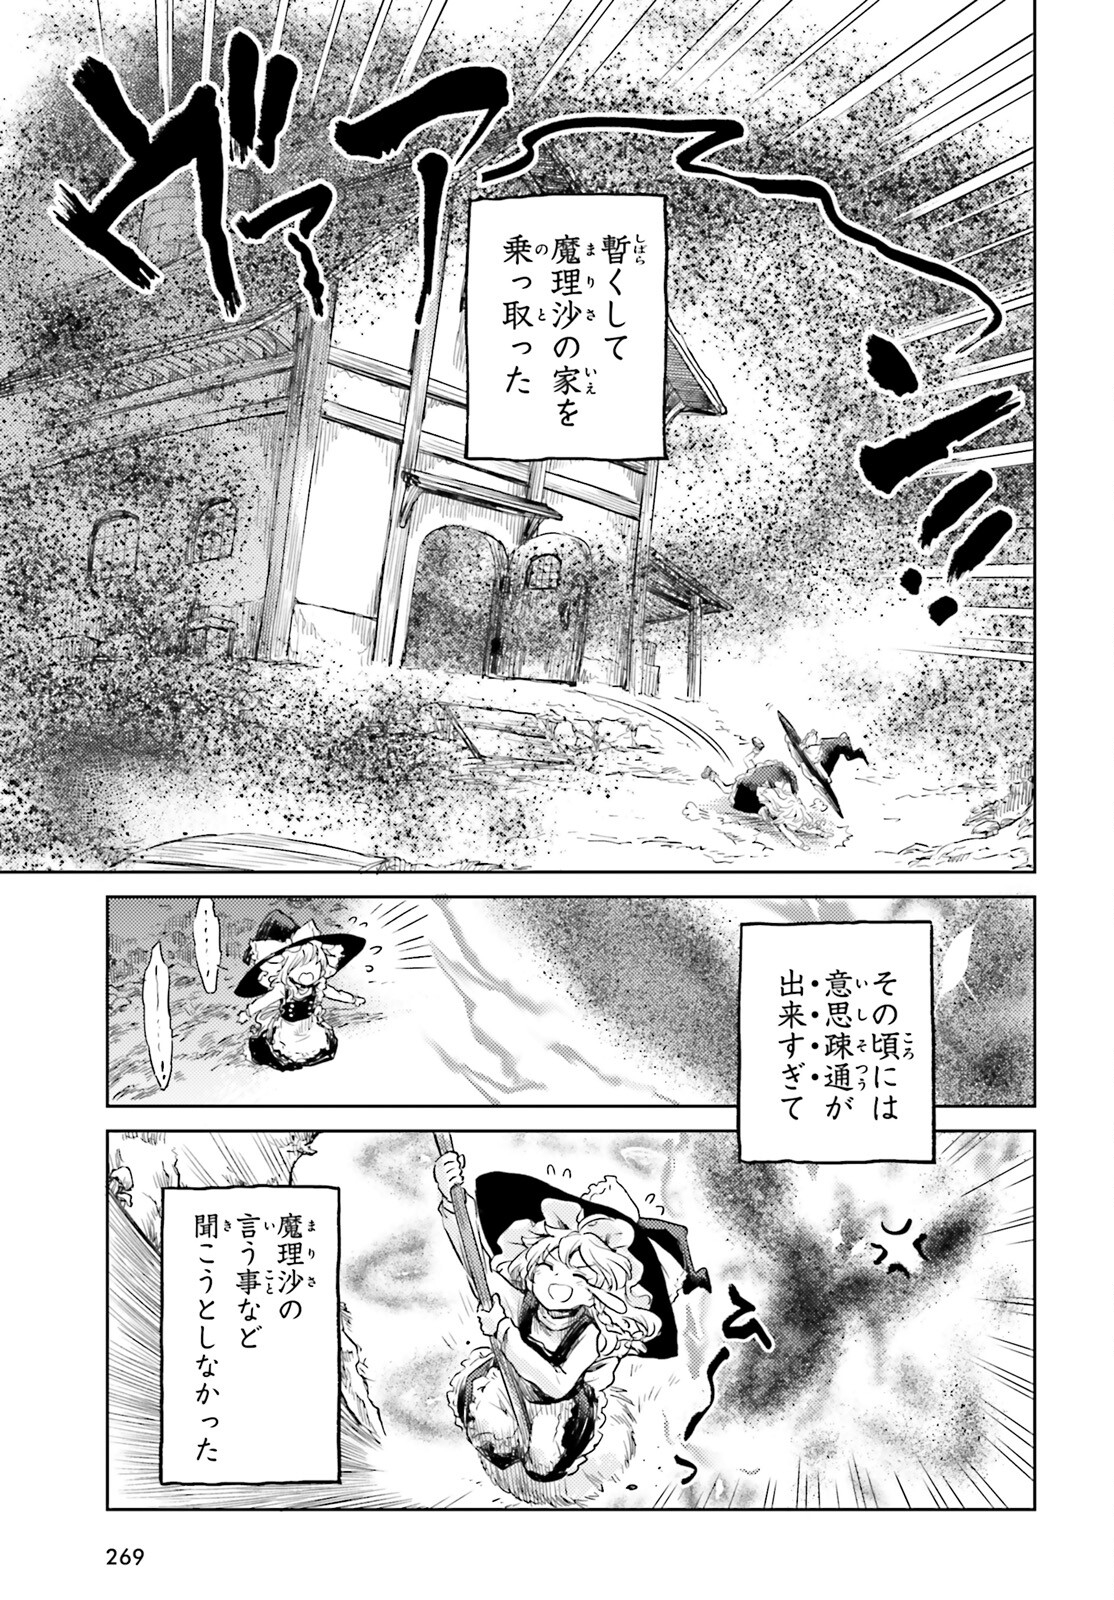 Touhouyoi Chouka Routasuiitaa-tachi no Yoiza - Chapter 46 - Page 19